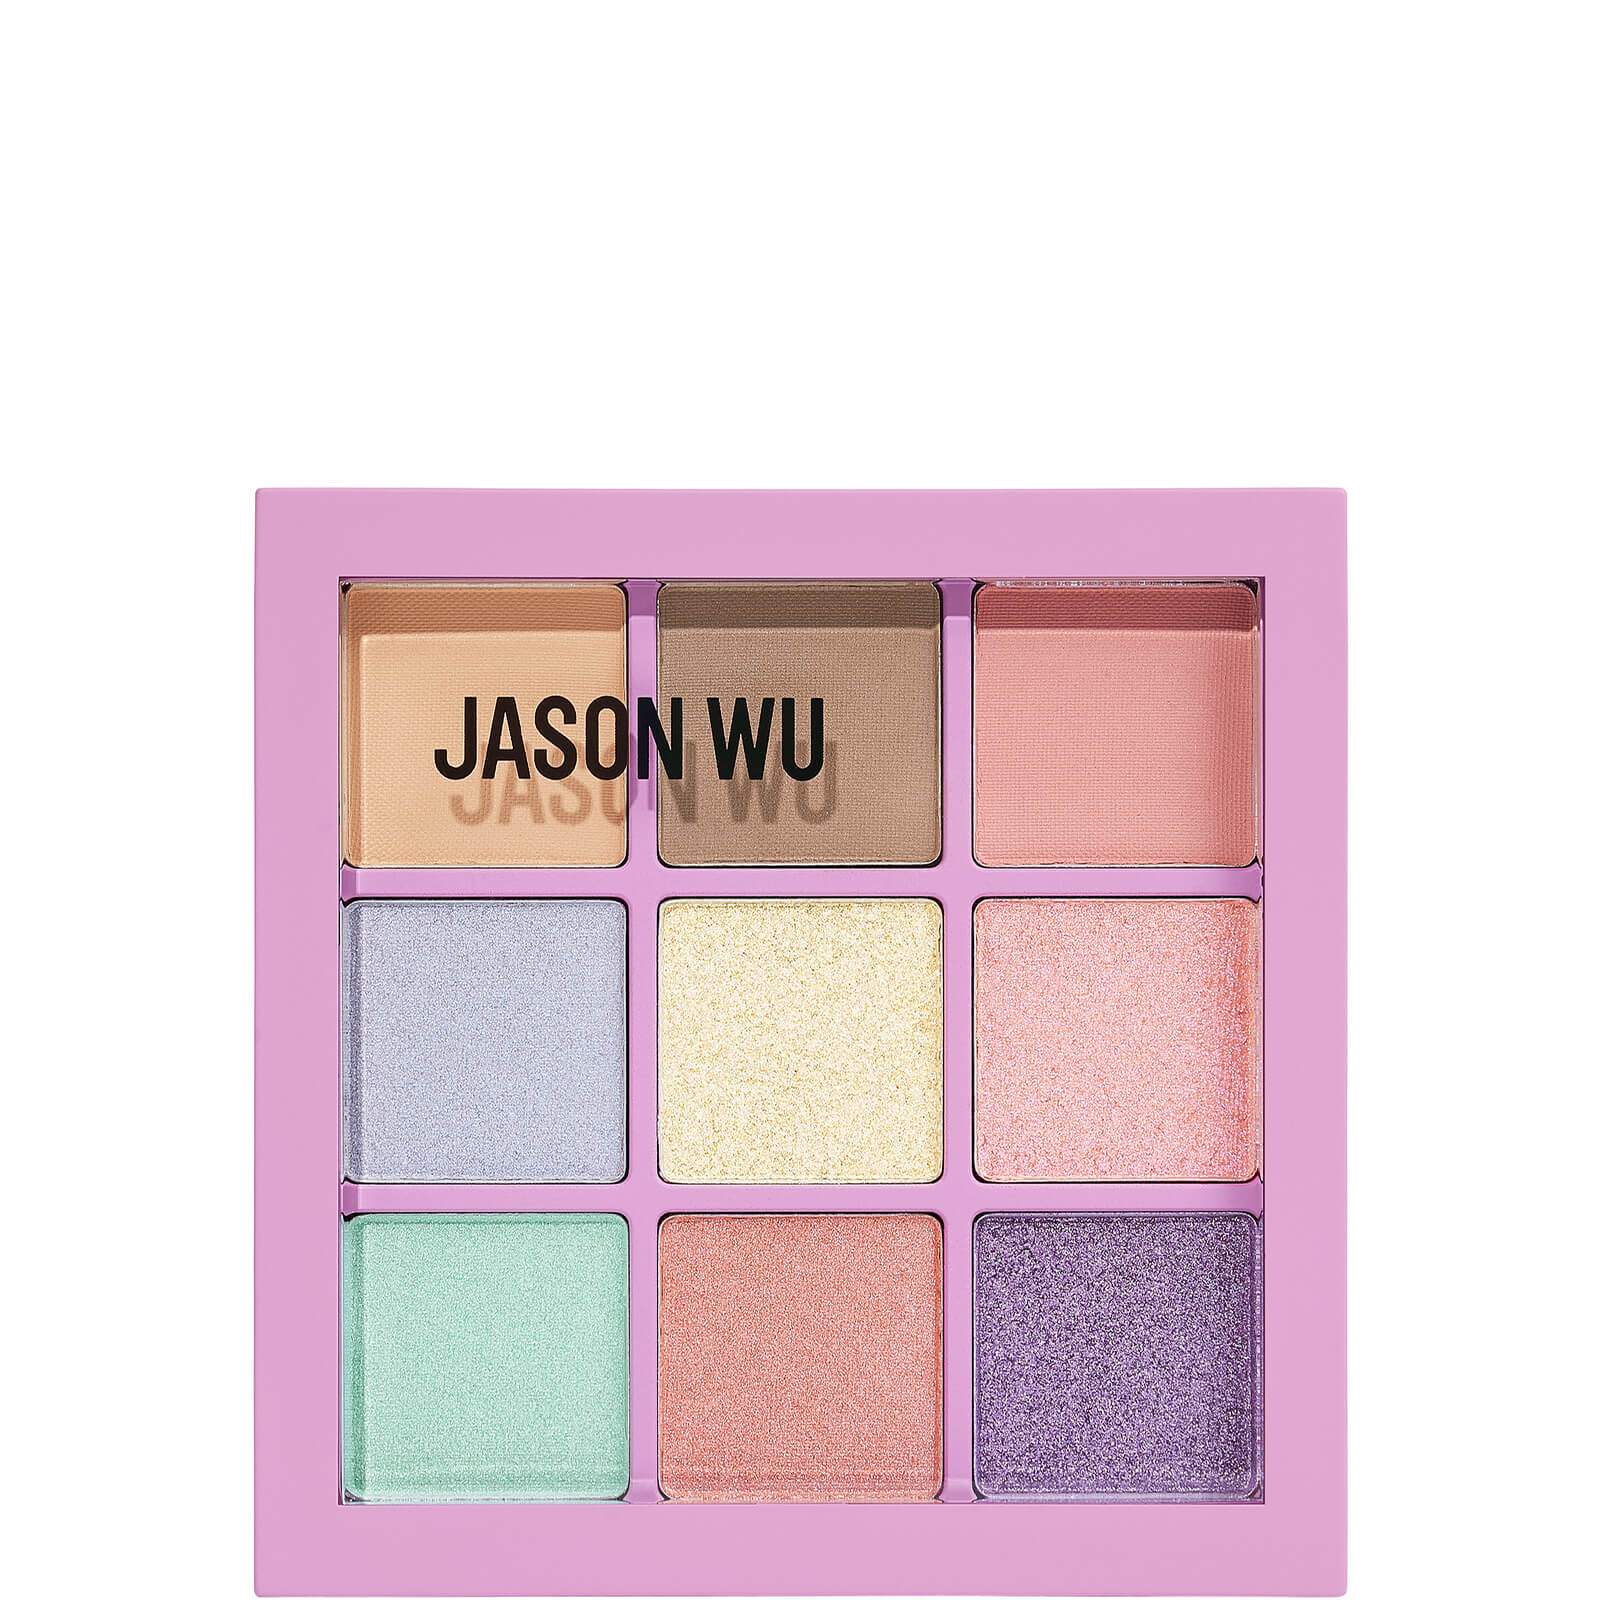 Jason Wu Beauty Flora 9 Palette 5.85g (various Shades) - Saguaro